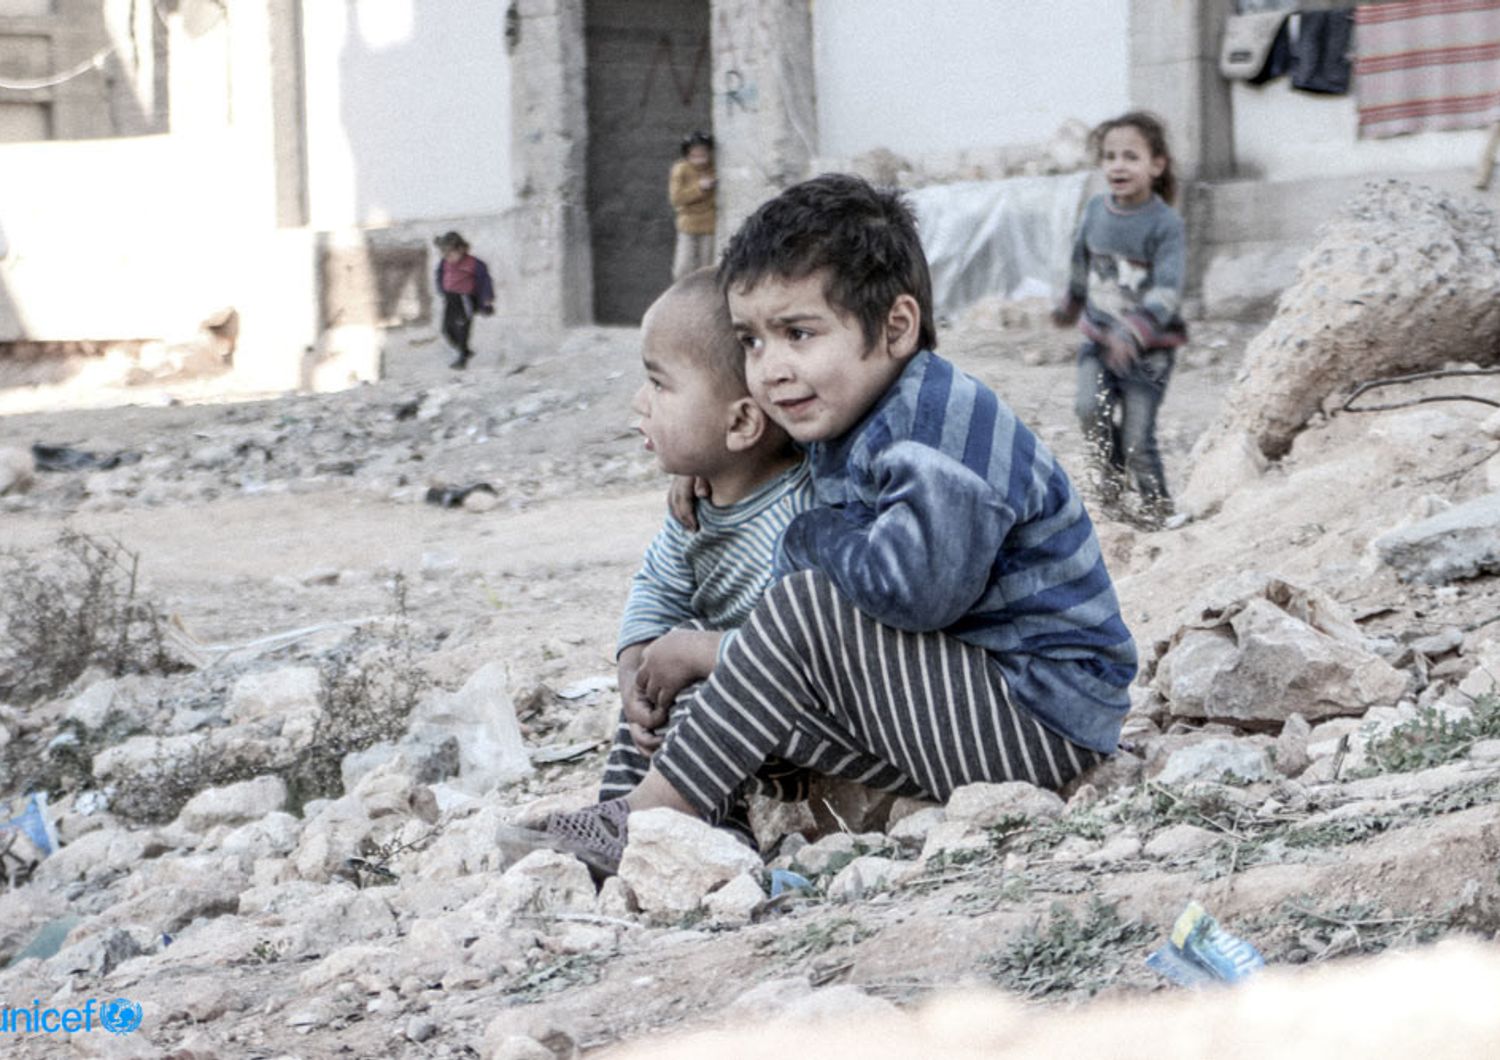 &nbsp; Unicef bambini rifugiati - sito